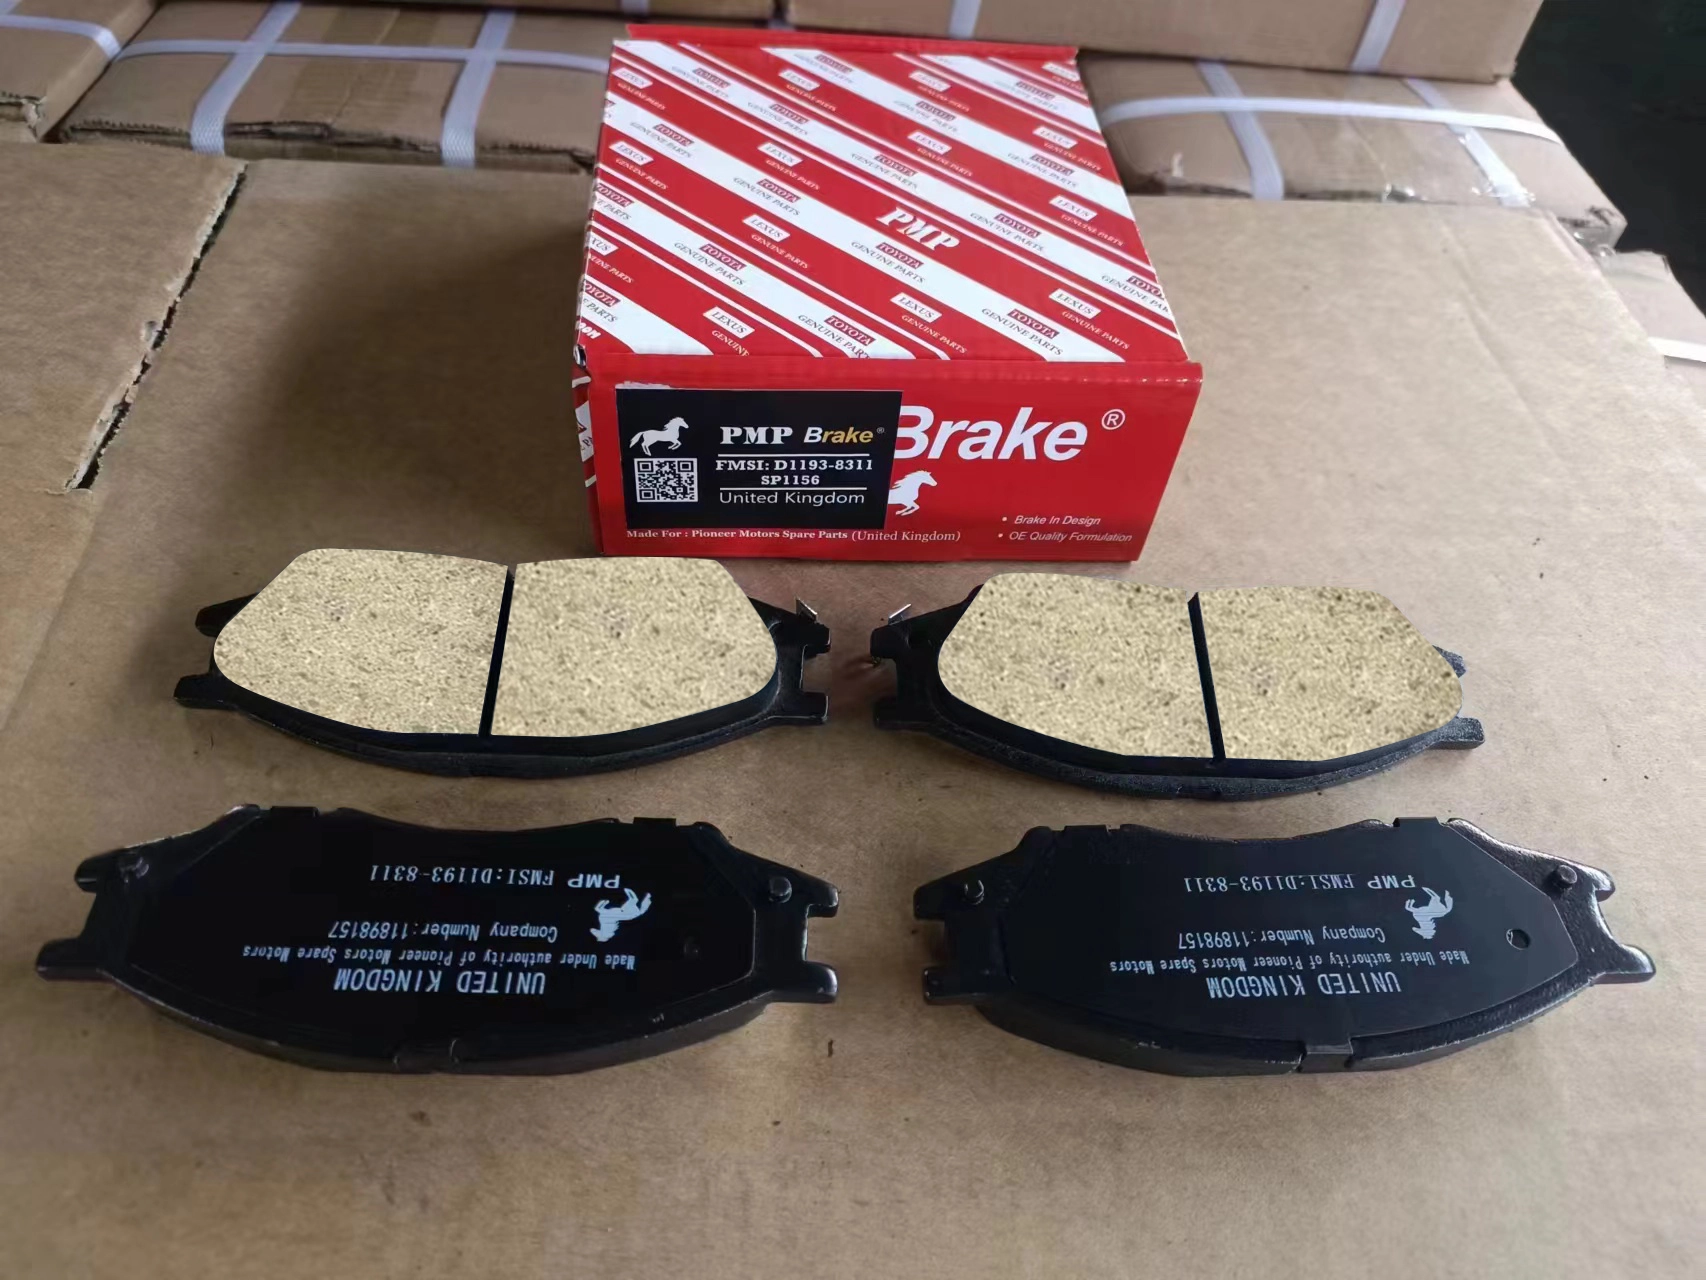 Durable ceramic brake pads designed for Toyota Corolla.